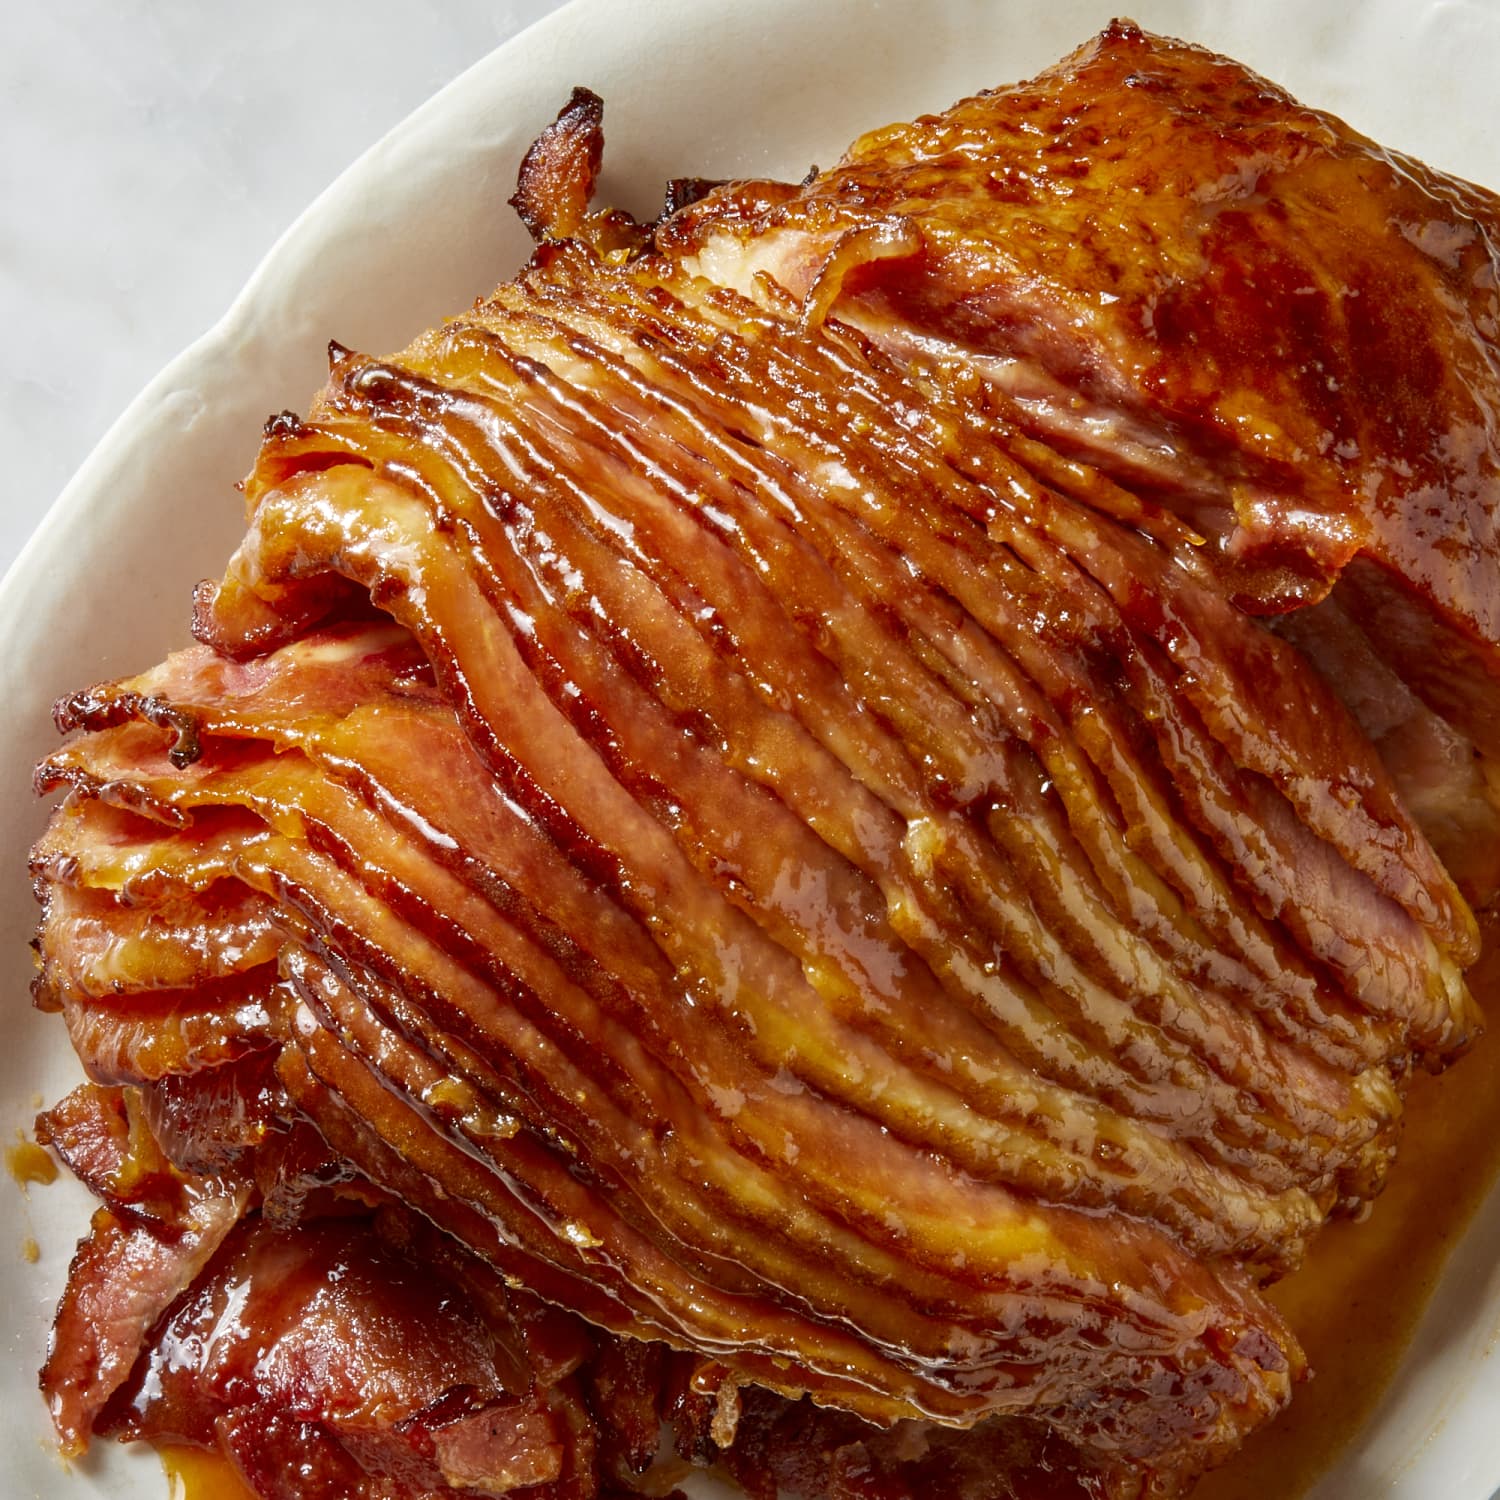 Glazed Holiday Ham Recipe - Only 5 Ingredients!